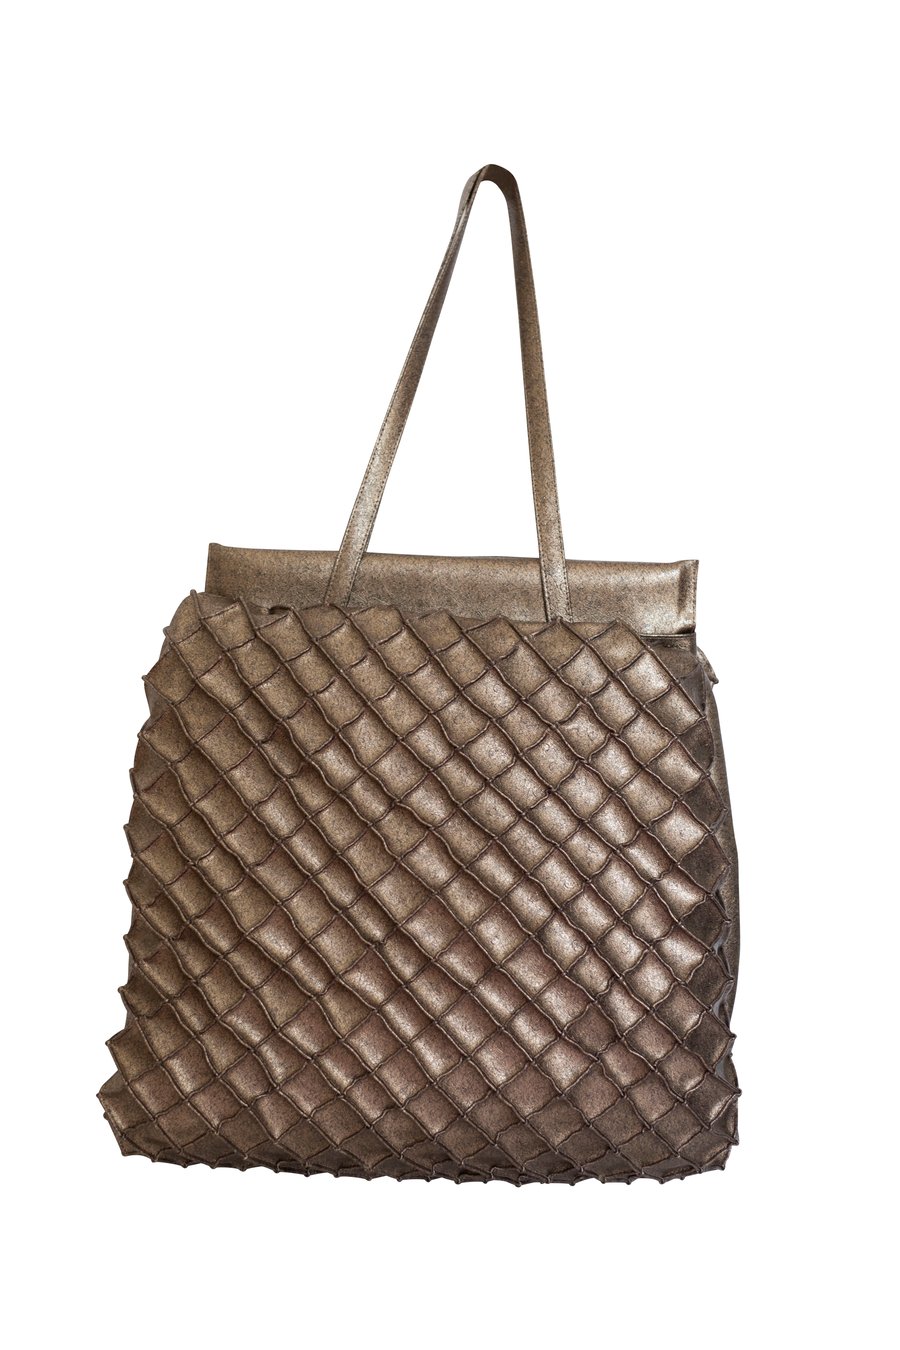 Image of Pineapple bag XXL - Bronze